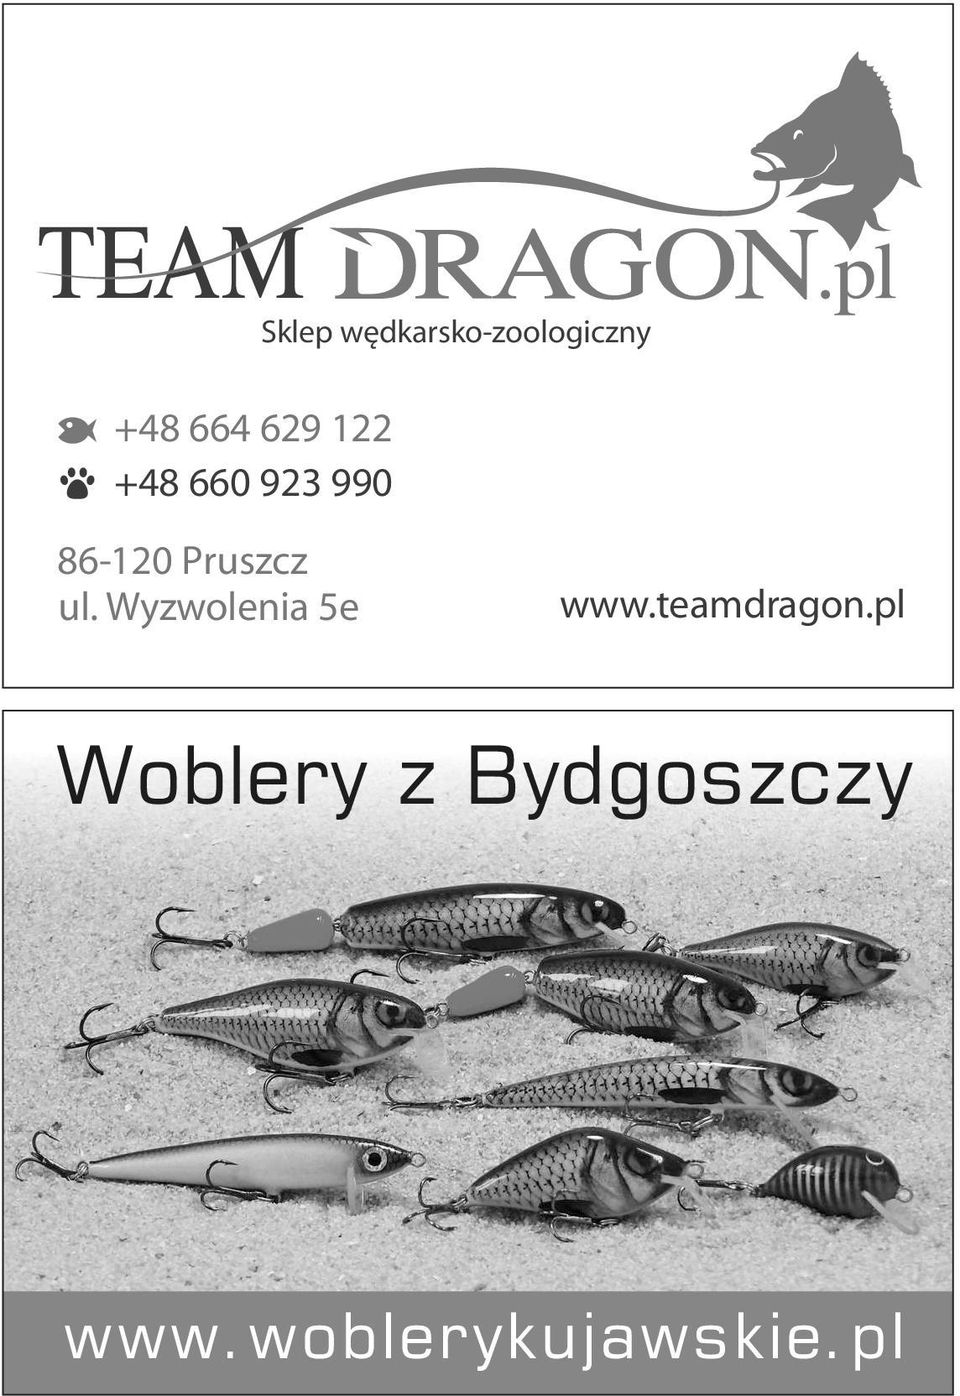 ul. Wyzwolenia 5e www.teamdragon.